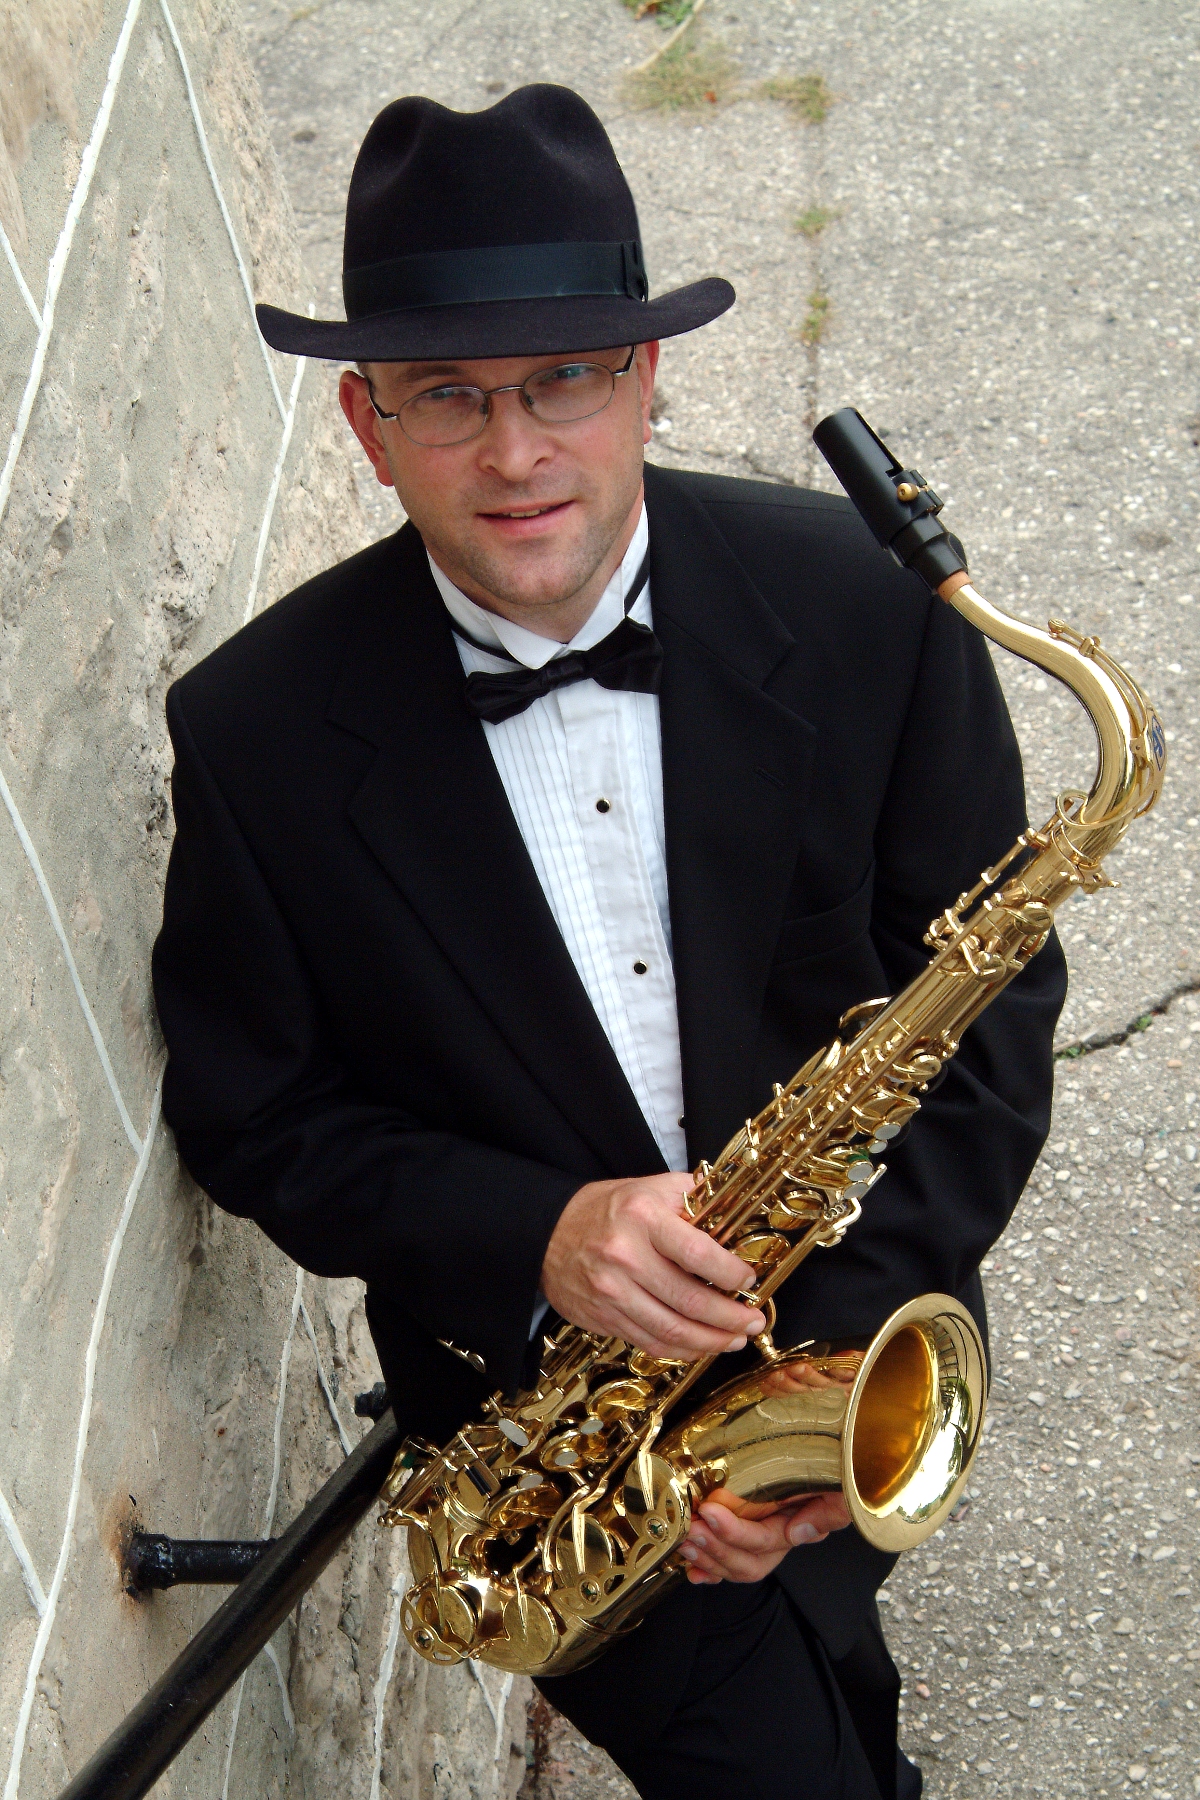 Photo of saxophonist Ernie Kalwa in a black tuxedo and black fedora, holding his saxophone